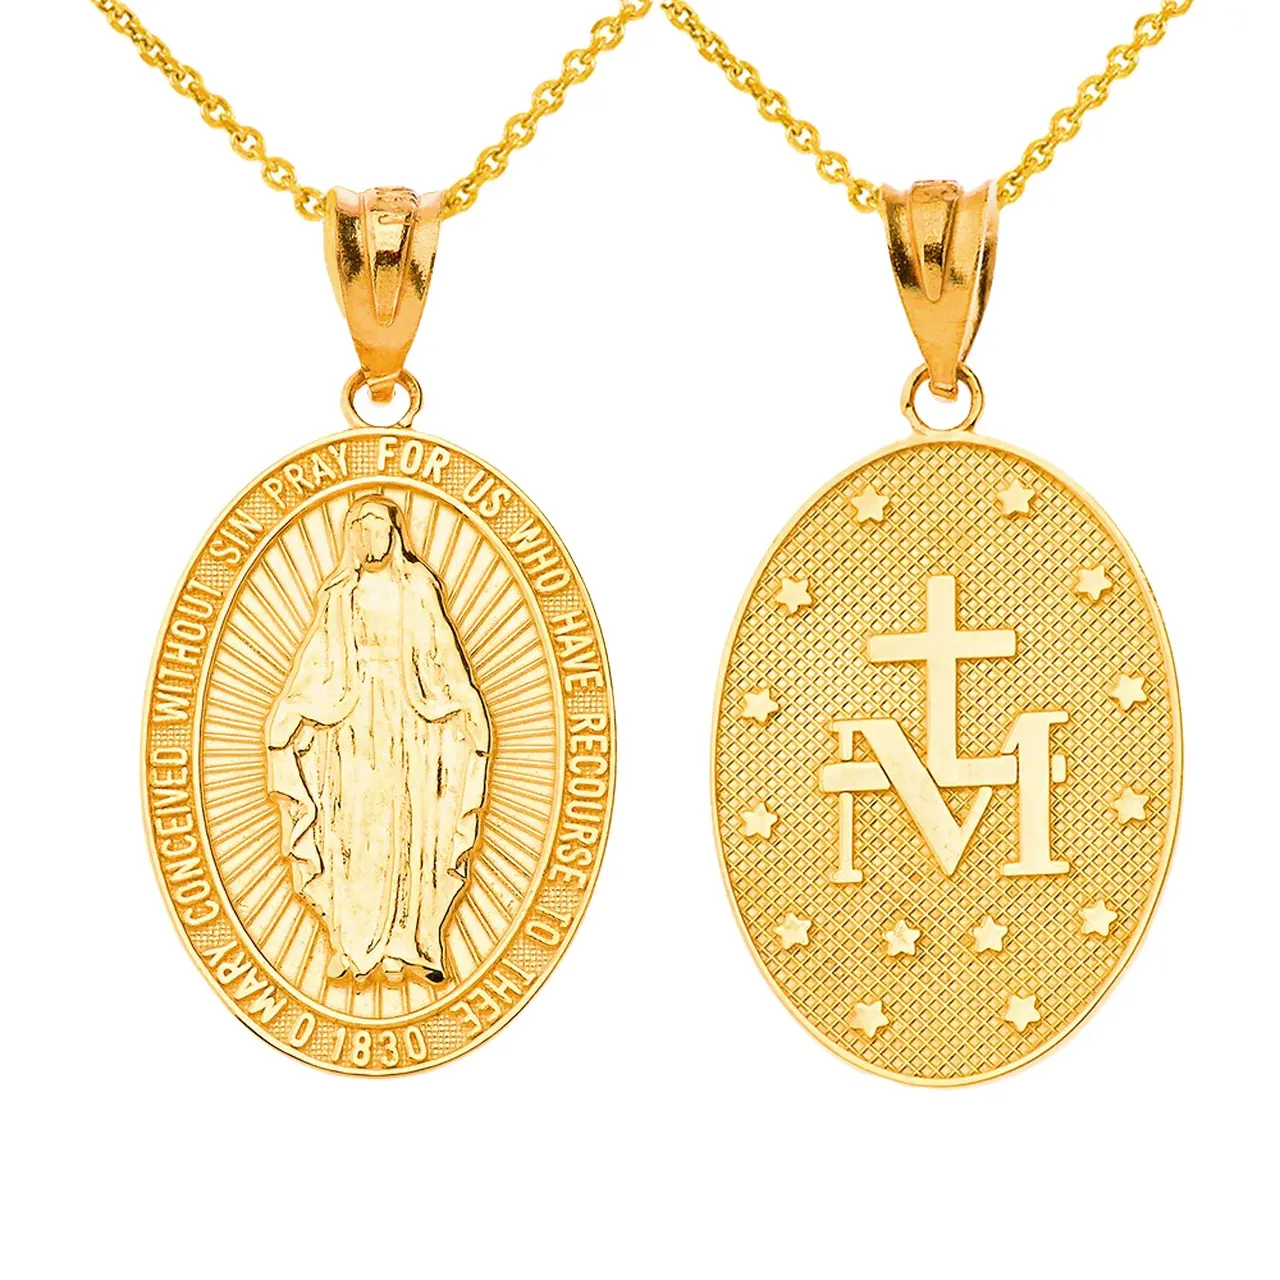 Medalla de Santo Personalizada, Medalla de Plata Católica, Religiosa y Cristiana Milagrosa